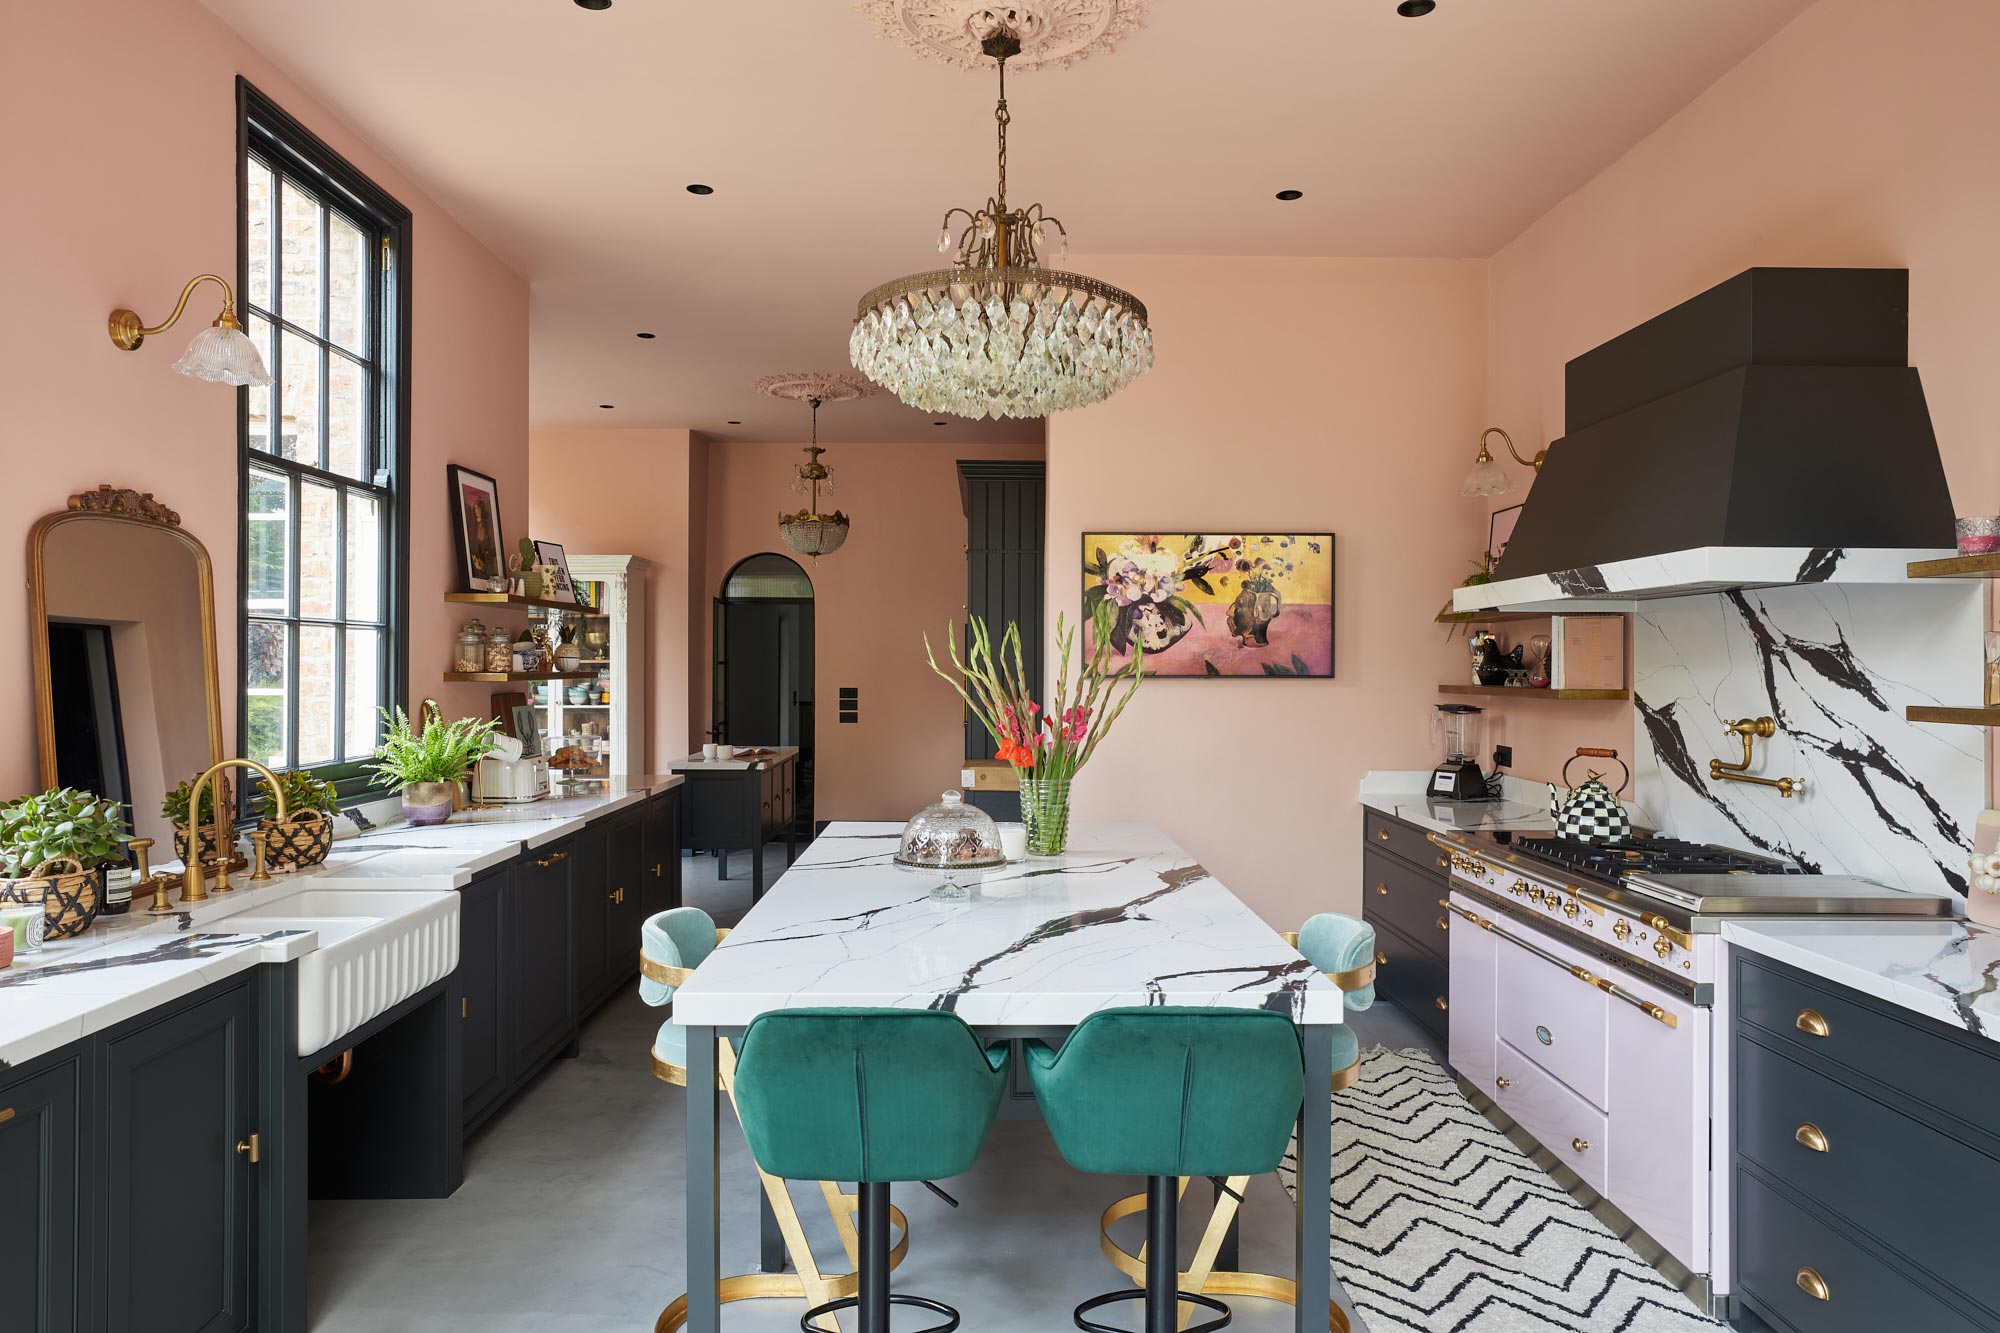 Shaker blue and pink kitchen design